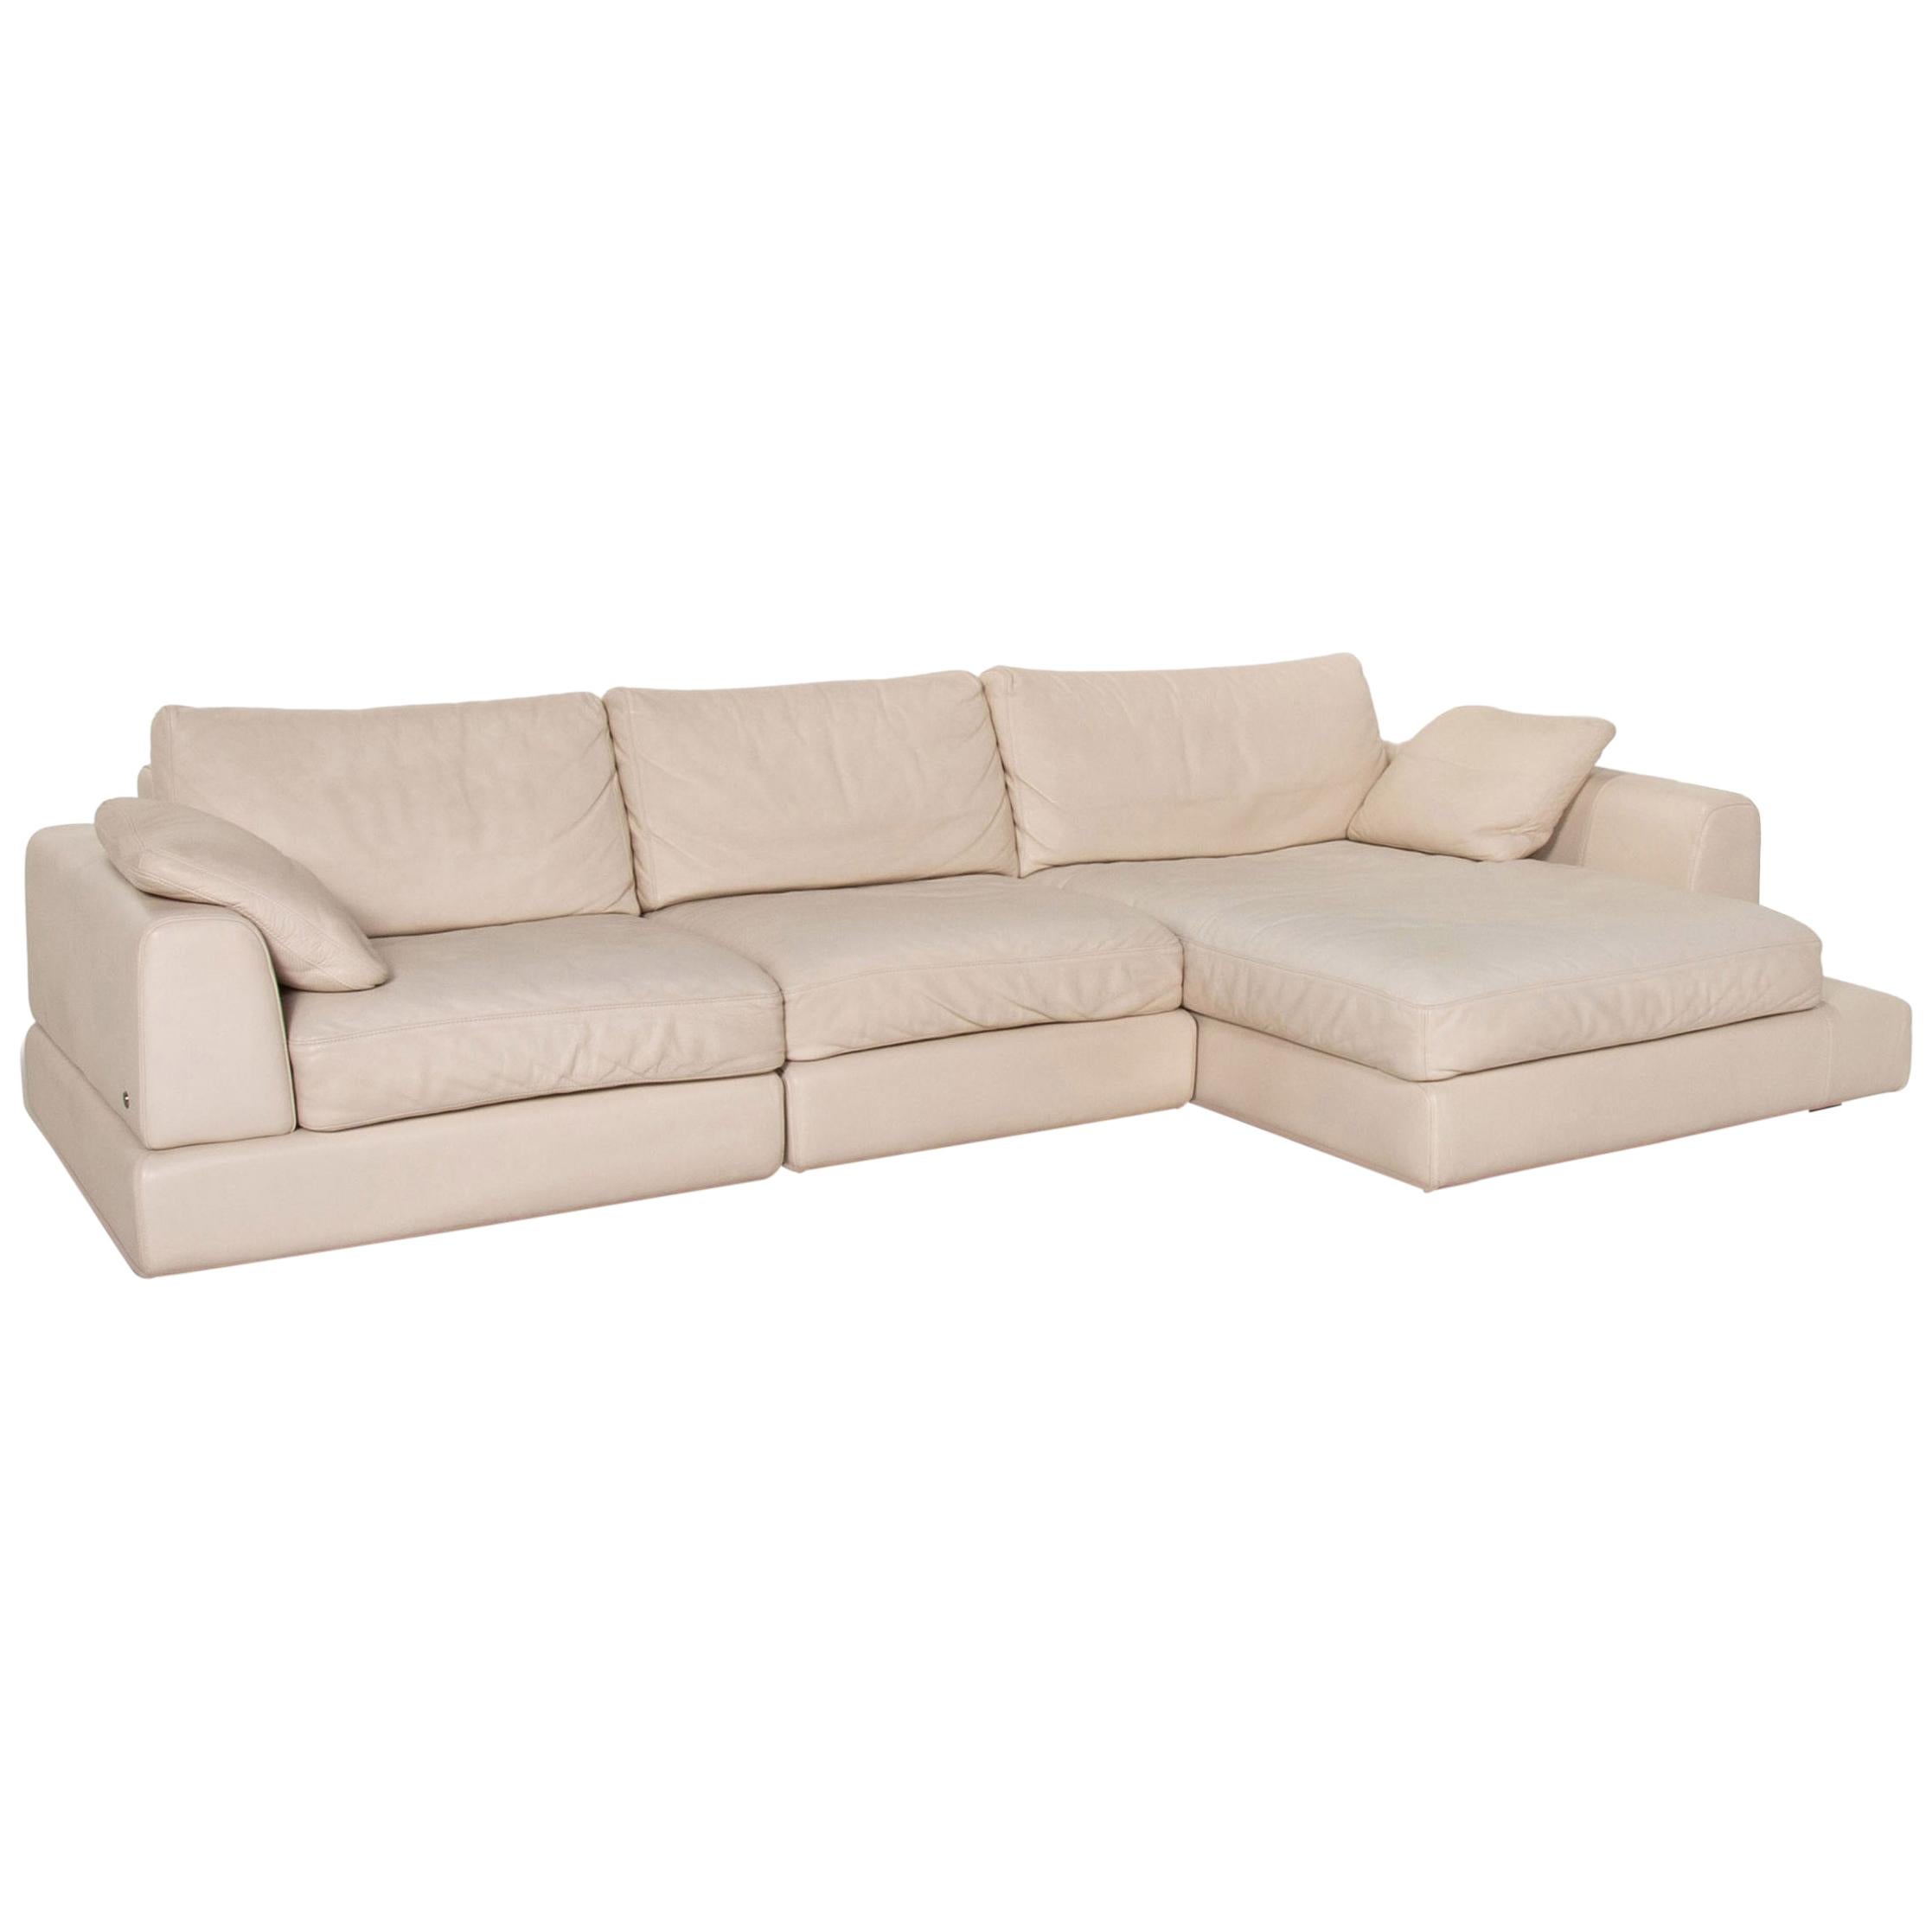 Natuzzi Diagonal 2375 Leather Corner Sofa Cream Sofa Couch For Sale